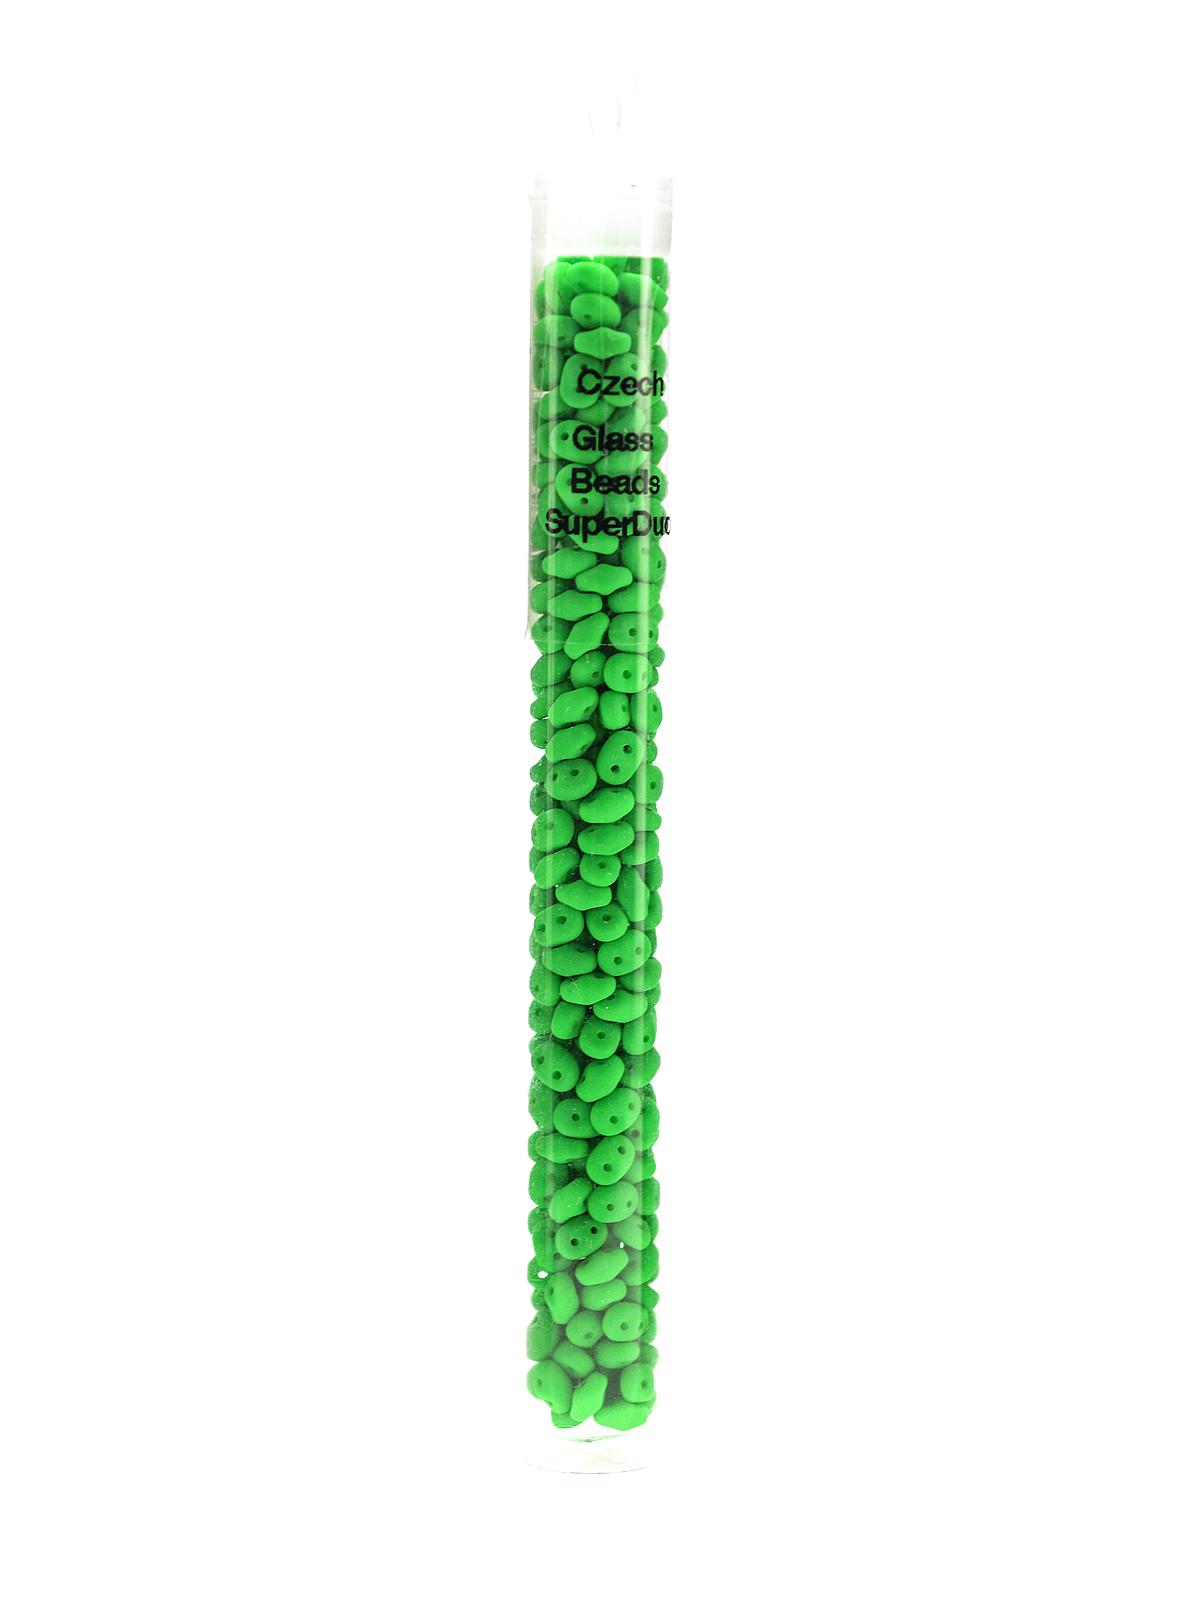 Super Duo Beads Neon Green 2.5 Mm X 5 Mm 24 Gm Tube